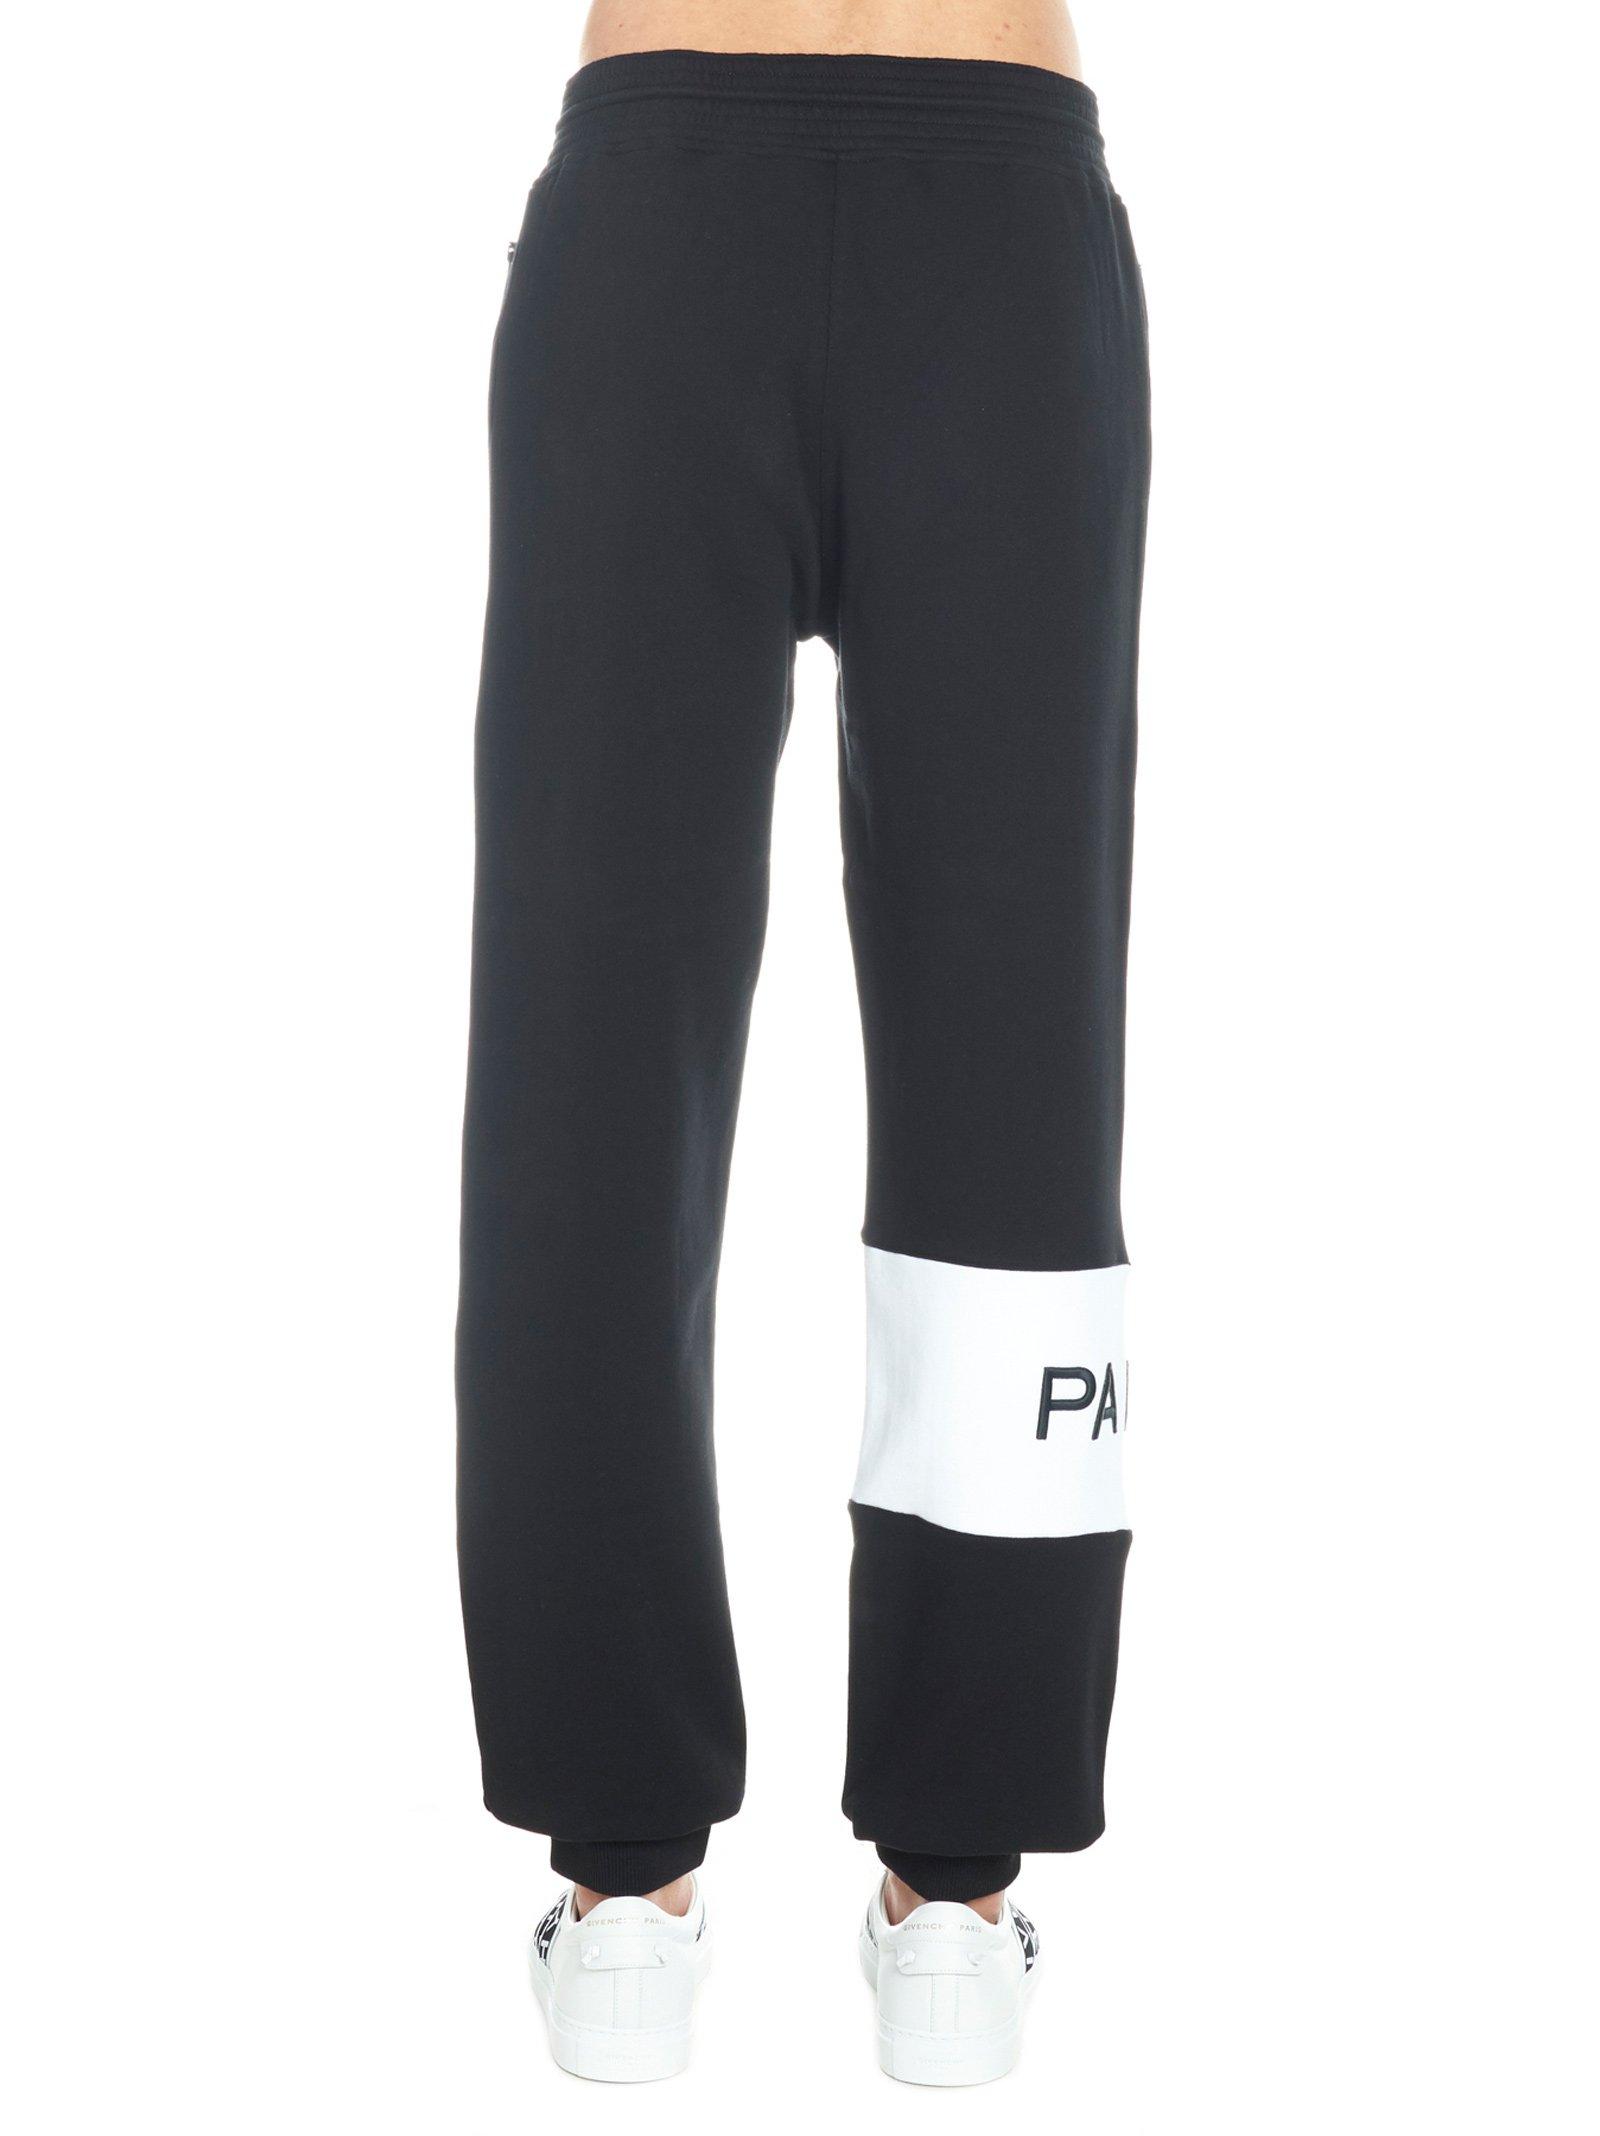 Givenchy Black Logo Cotton Sweatpants for Men - Lyst